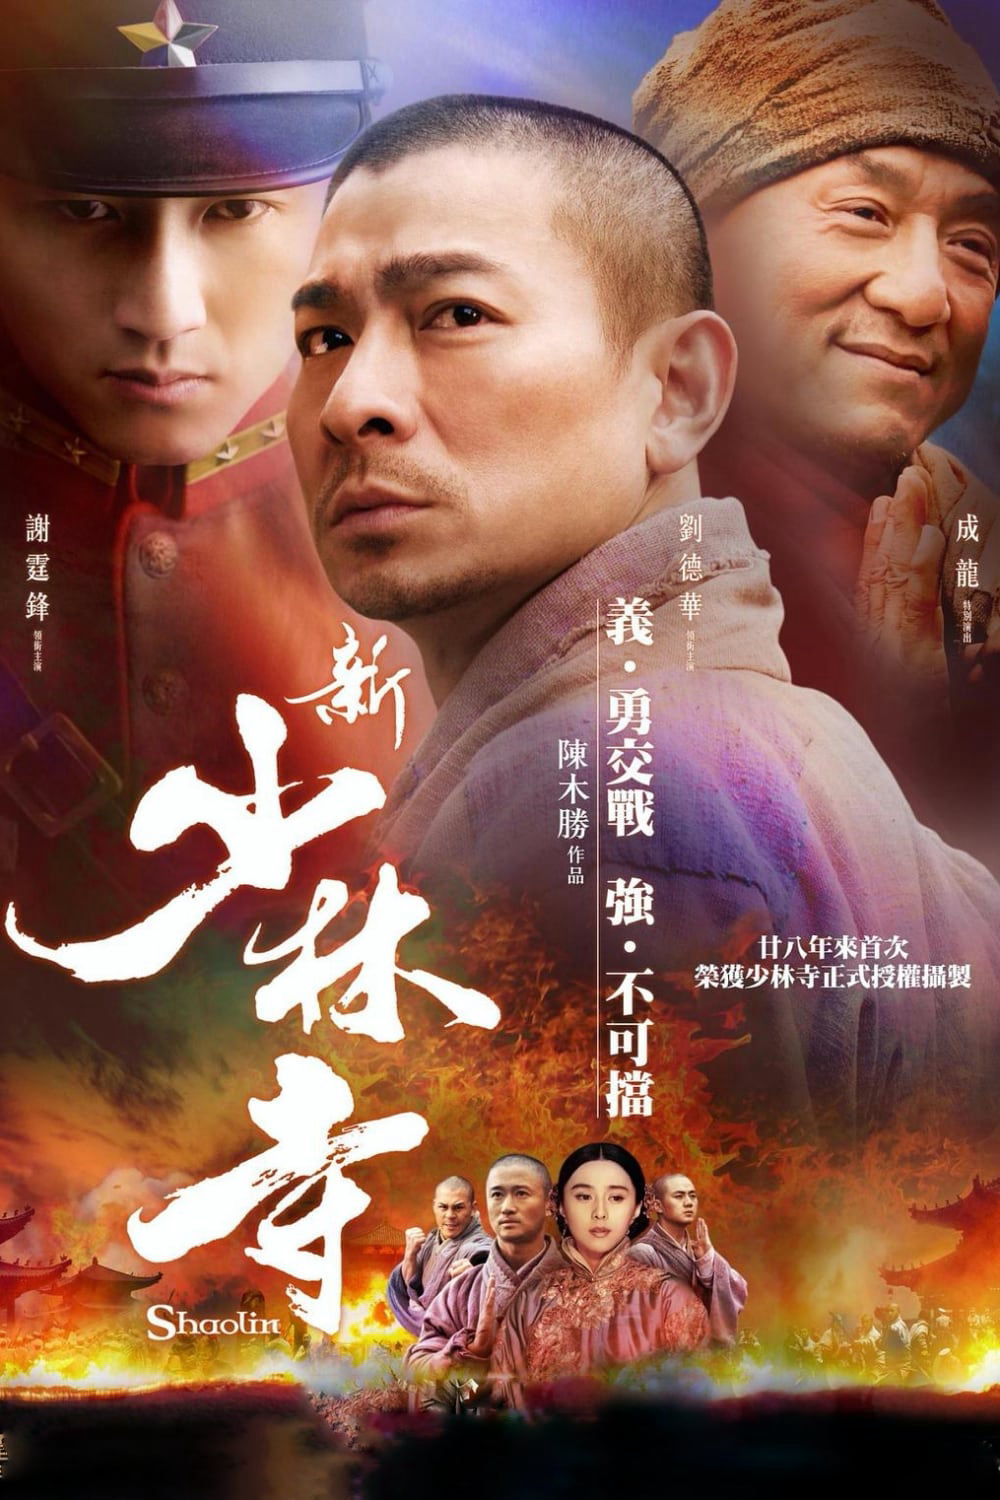 Poster Phim Tân Thiếu Lâm Tự - Shaolin (Shaolin)